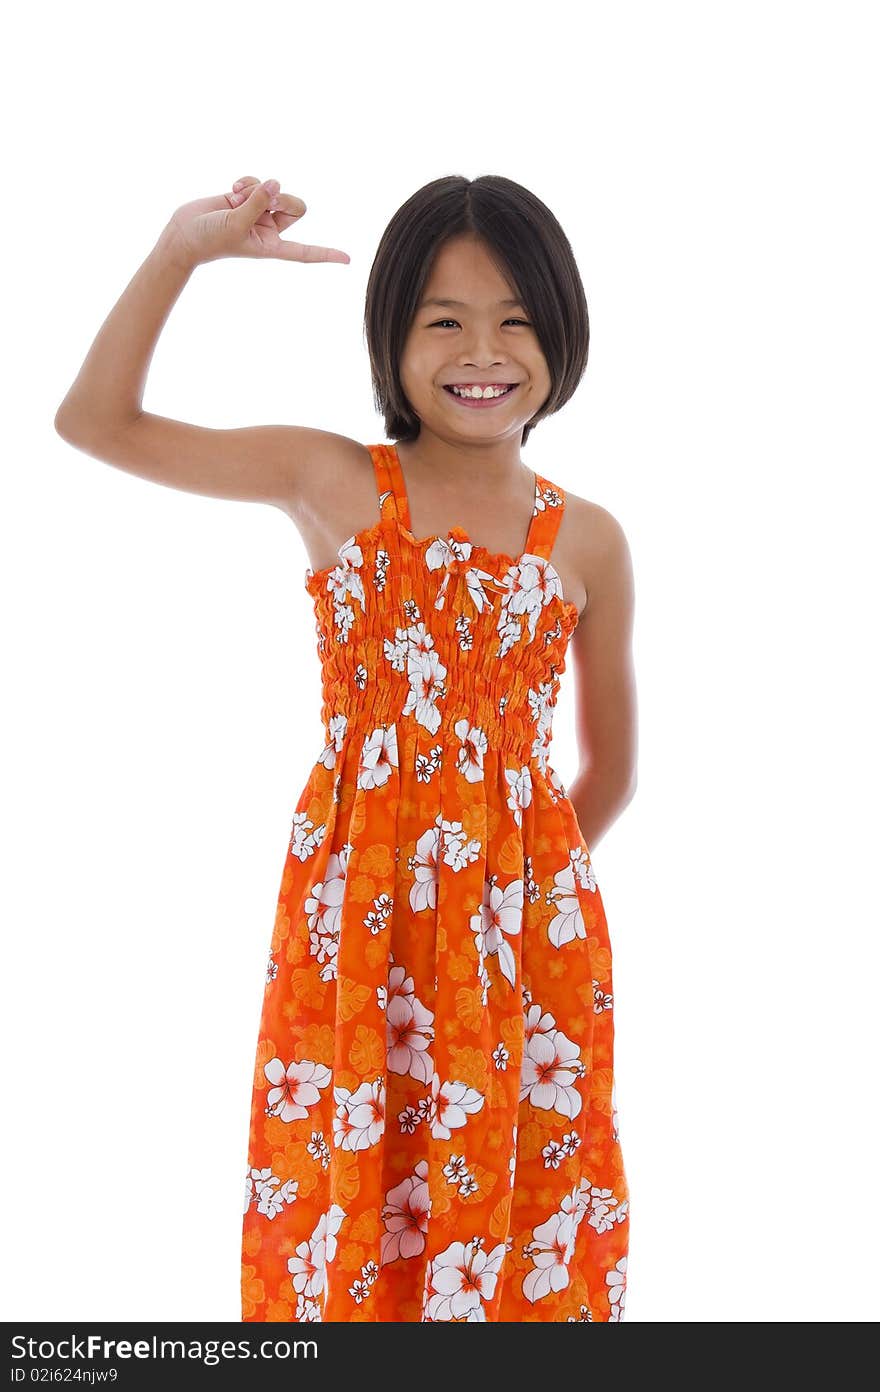 Cute shy asian girl raising her hand, isolated on white background. Cute shy asian girl raising her hand, isolated on white background